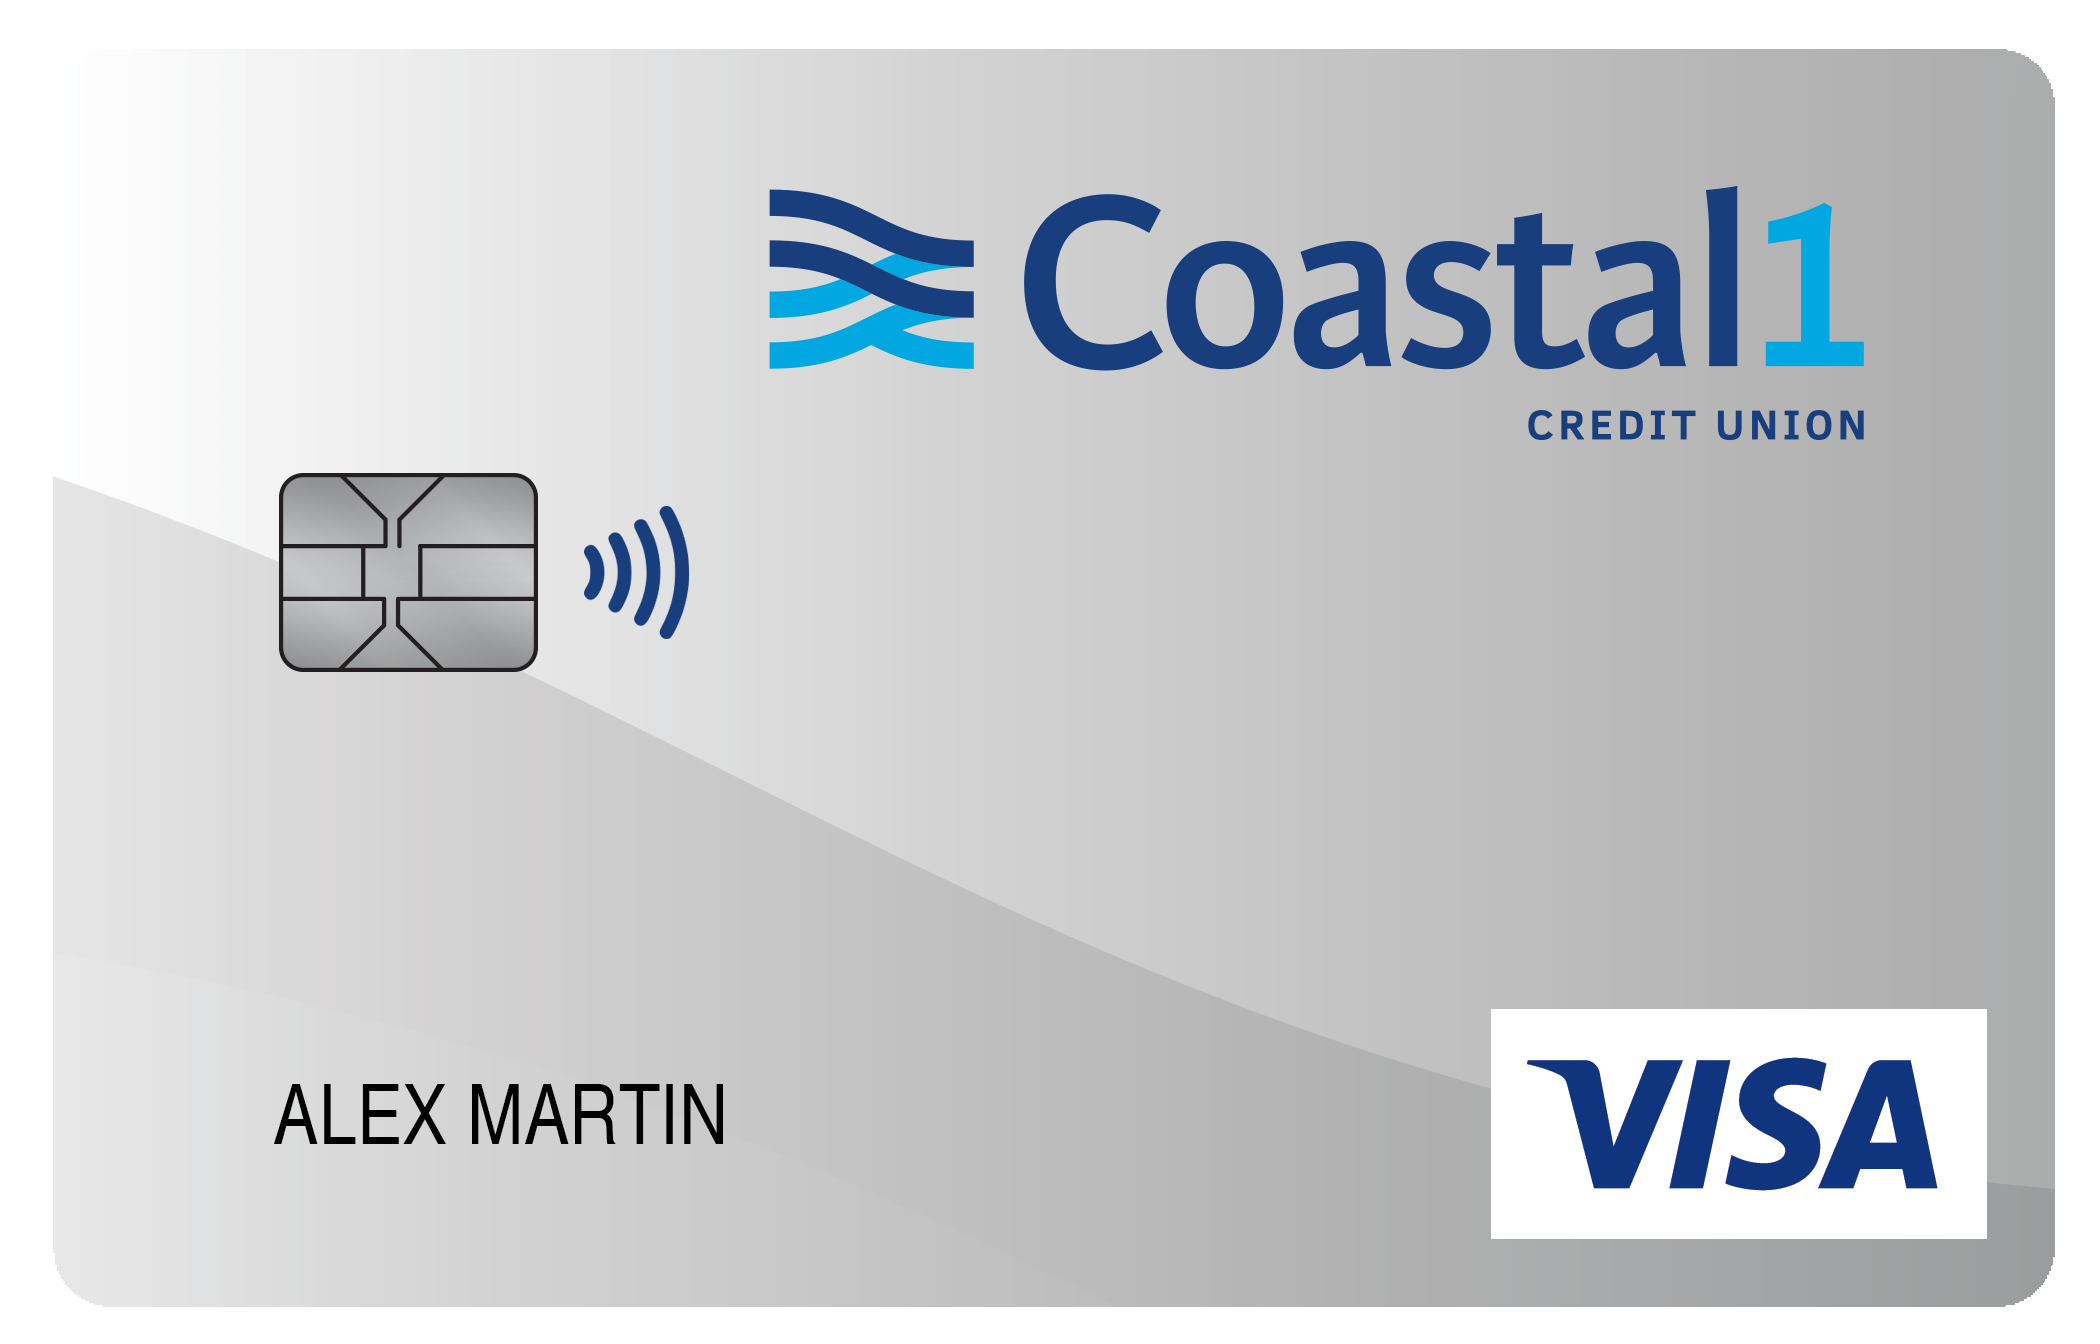 Coastal1 Platinum Visa Card